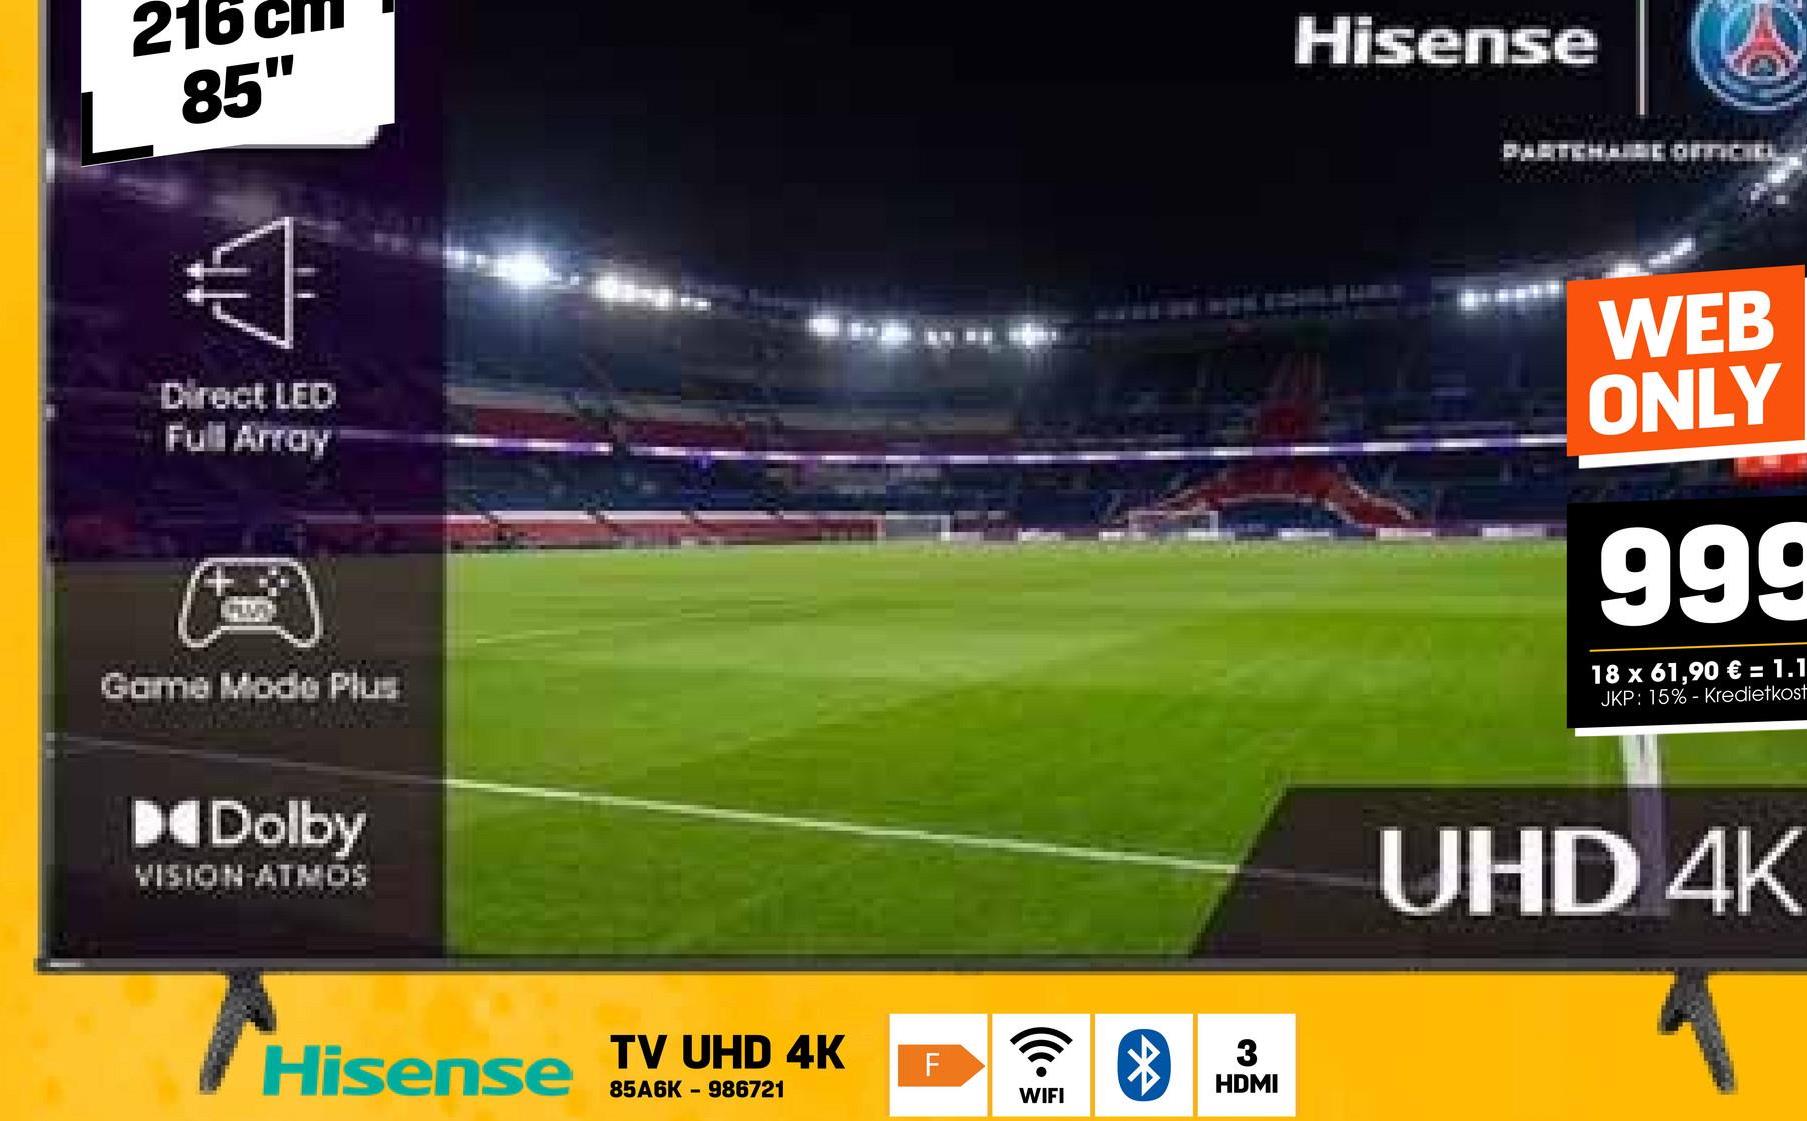 216
85"
Hisense
Direct LED
Full Array
Game Mode Plus
Dolby
VISION ATMOS
Hisense
TV UHD 4K
85A6K 986721
F
ི®
WIFI
3
HDMI
WEB
ONLY
999
18 x 61,90 € = 1.1
JKP: 15%- Kredietkost
UHD 4K